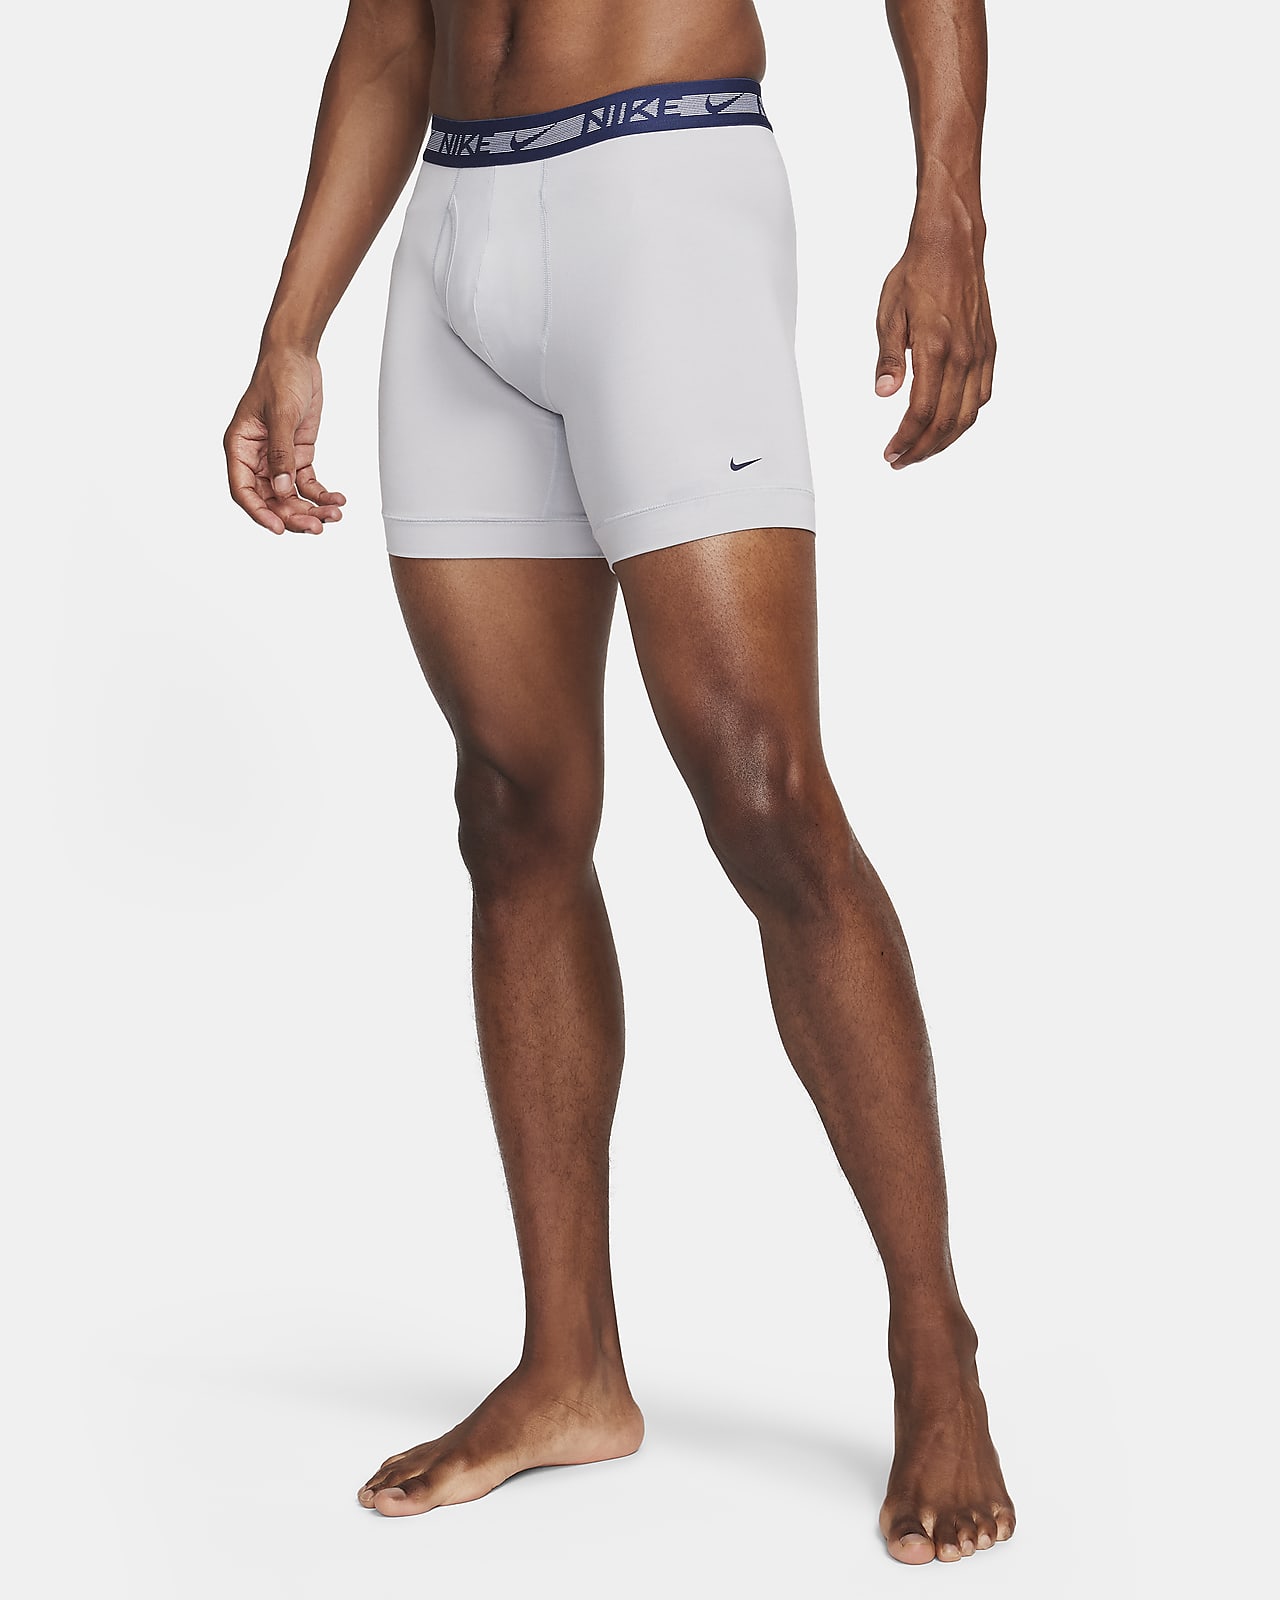 Men's First Quality Boxer Shorts - Men's Underwear